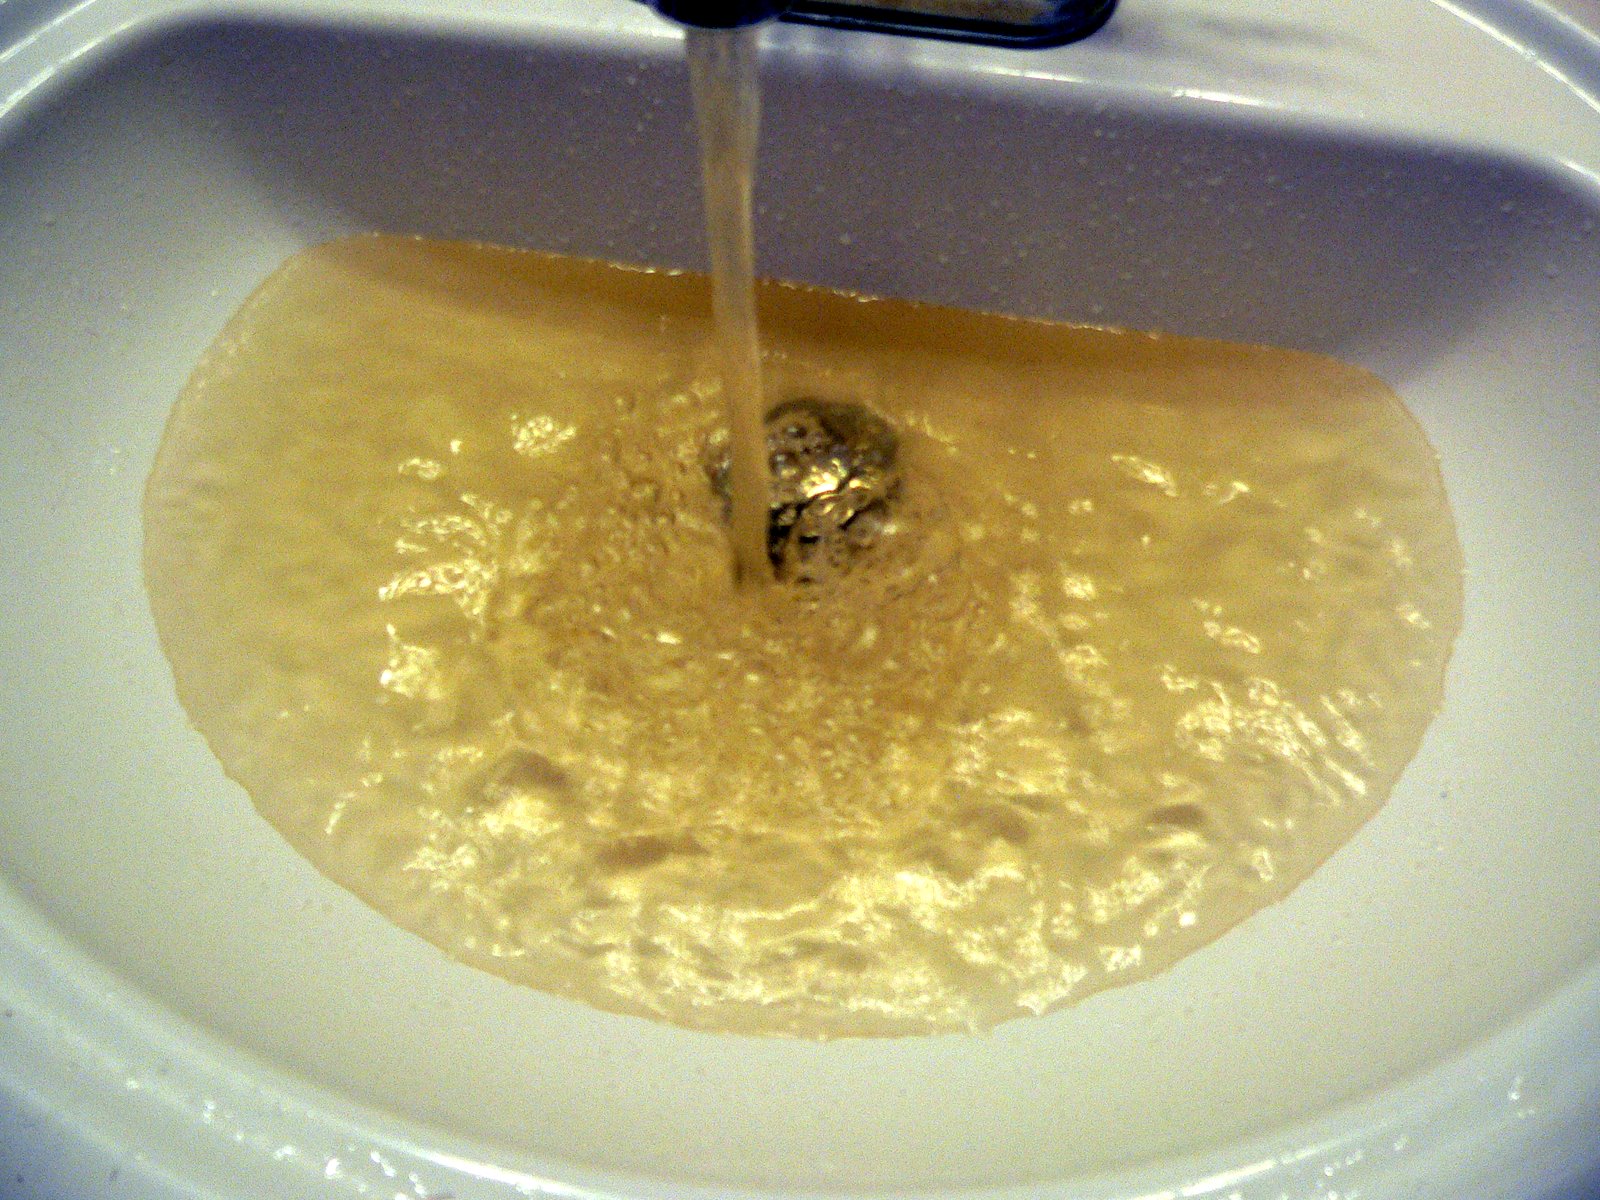 what causes brown water through taps?